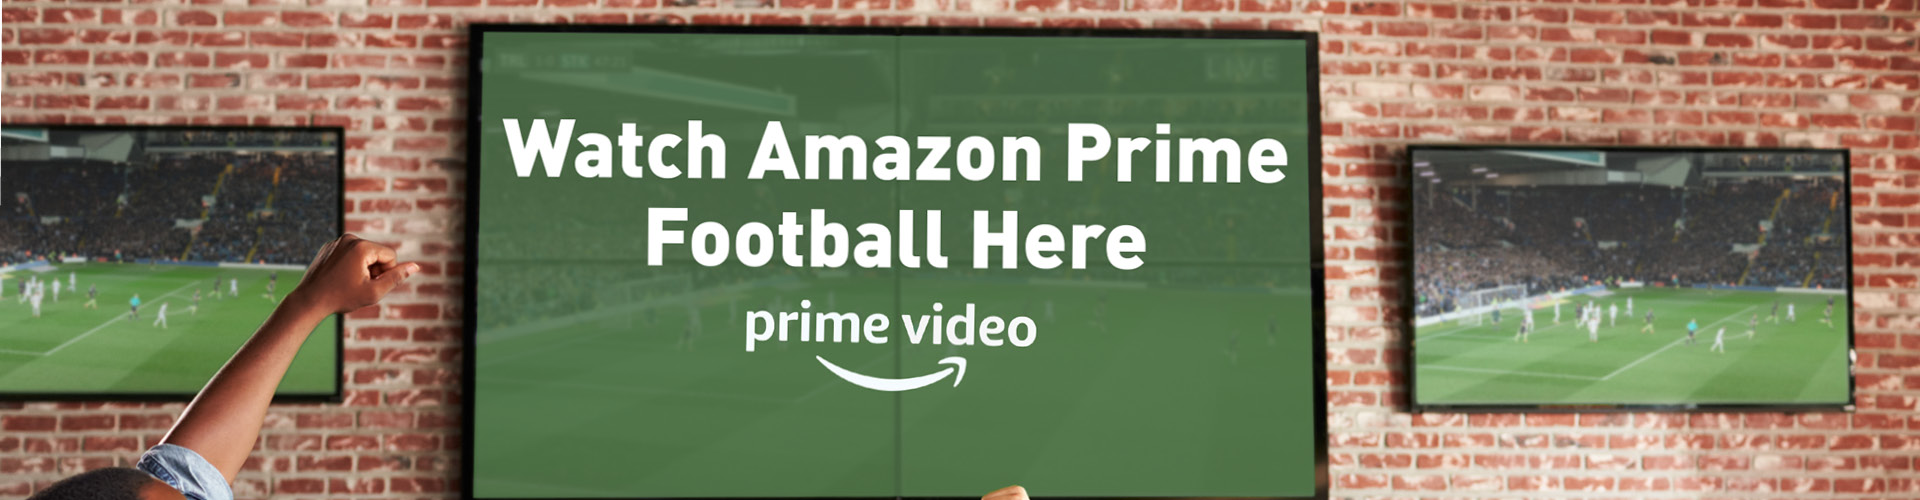 Watch Amazon Prime football at Yates Torquay in Torquay